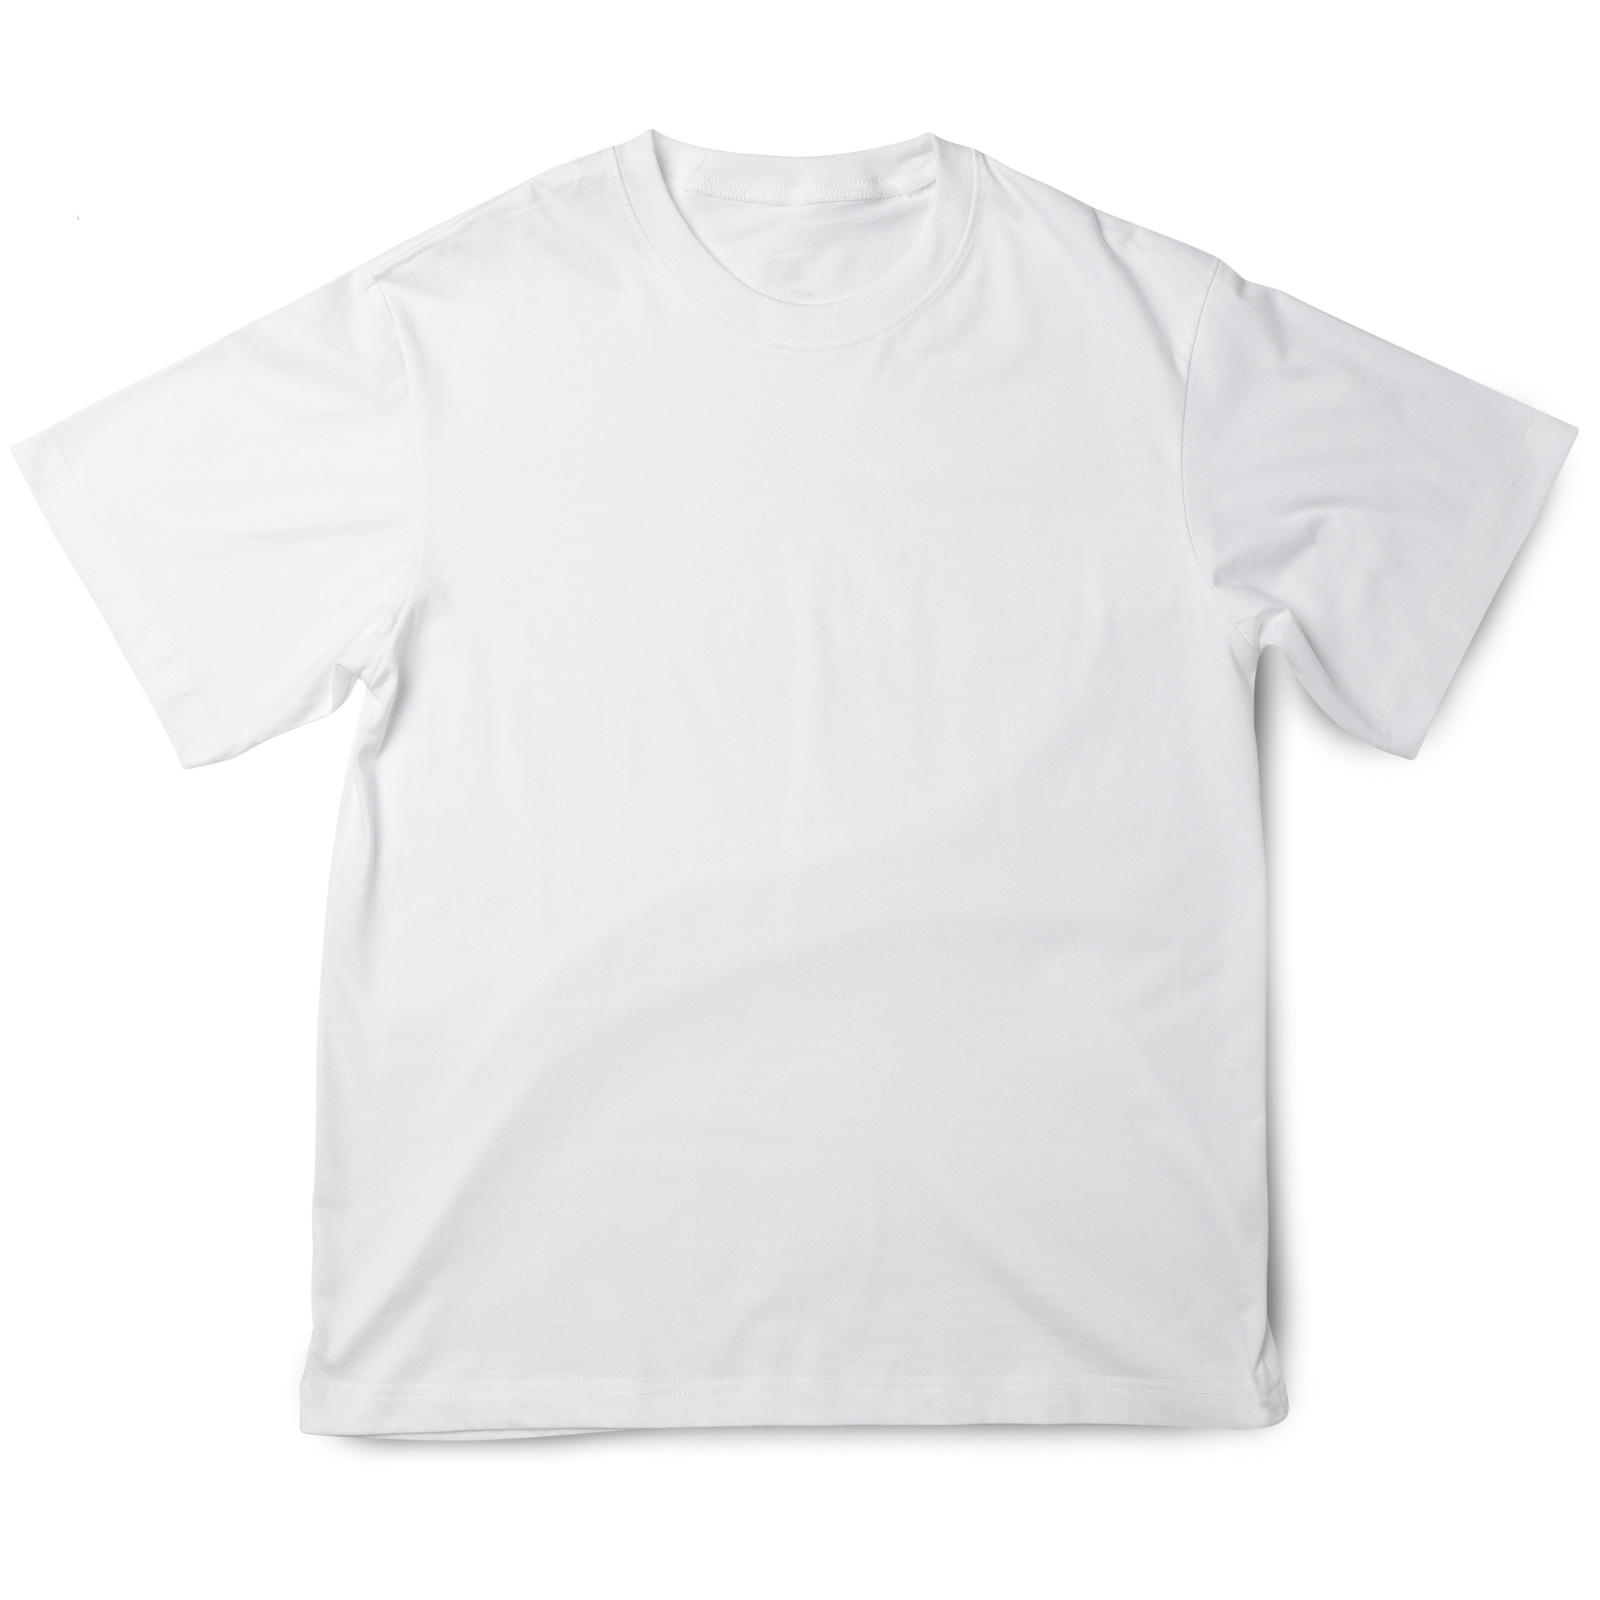 Tシャツ メンズ 半袖 無地 白 日本製 超厚手 8.8オンス 透けない 透け防止 綿100 日本人...